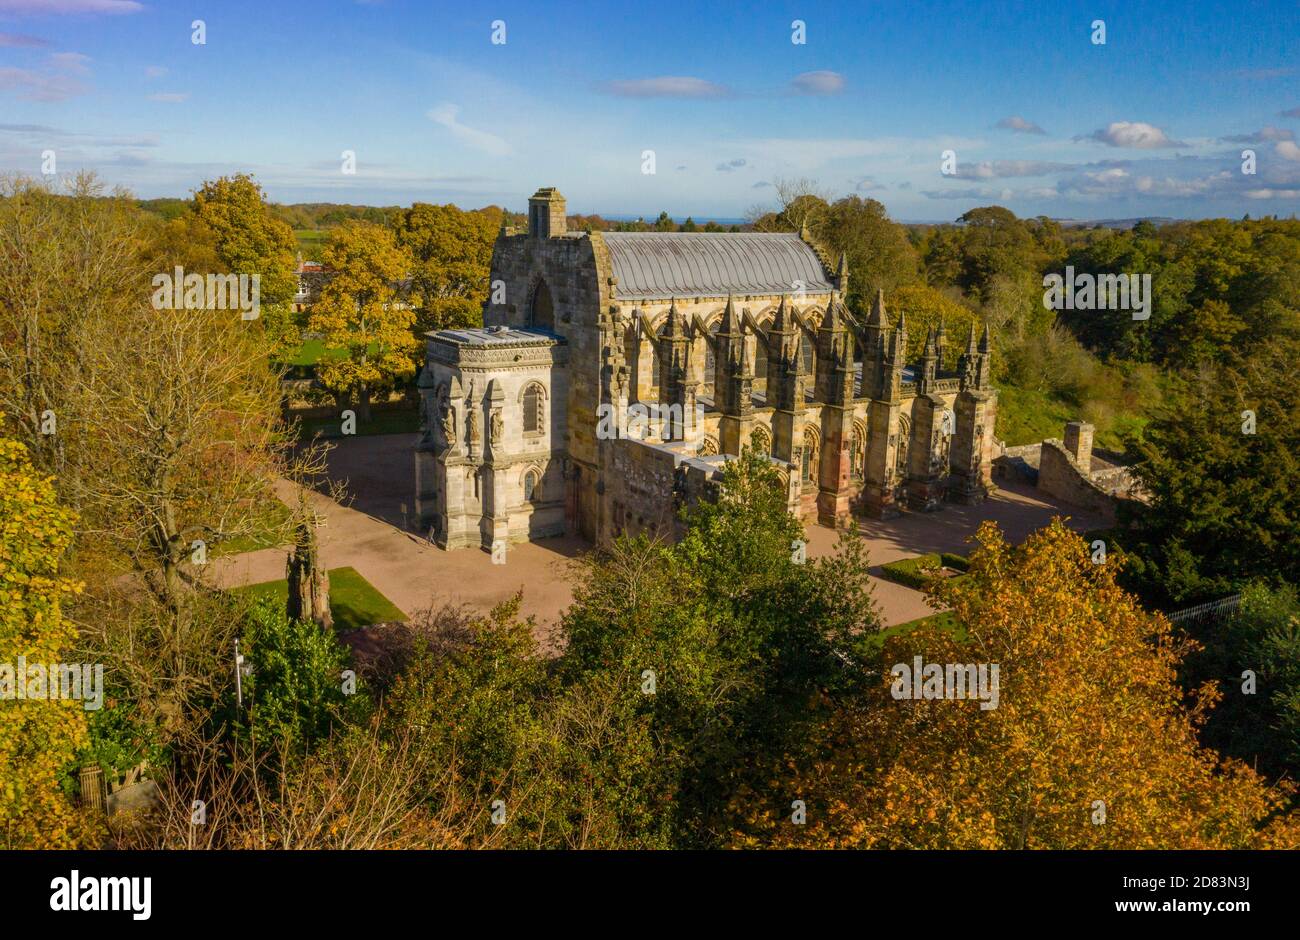 Rosslyn Chapel Roslin Edinburgh, Midlothian. Ecosse Royaume-Uni photo Phil Wilkinson / Alay Banque D'Images